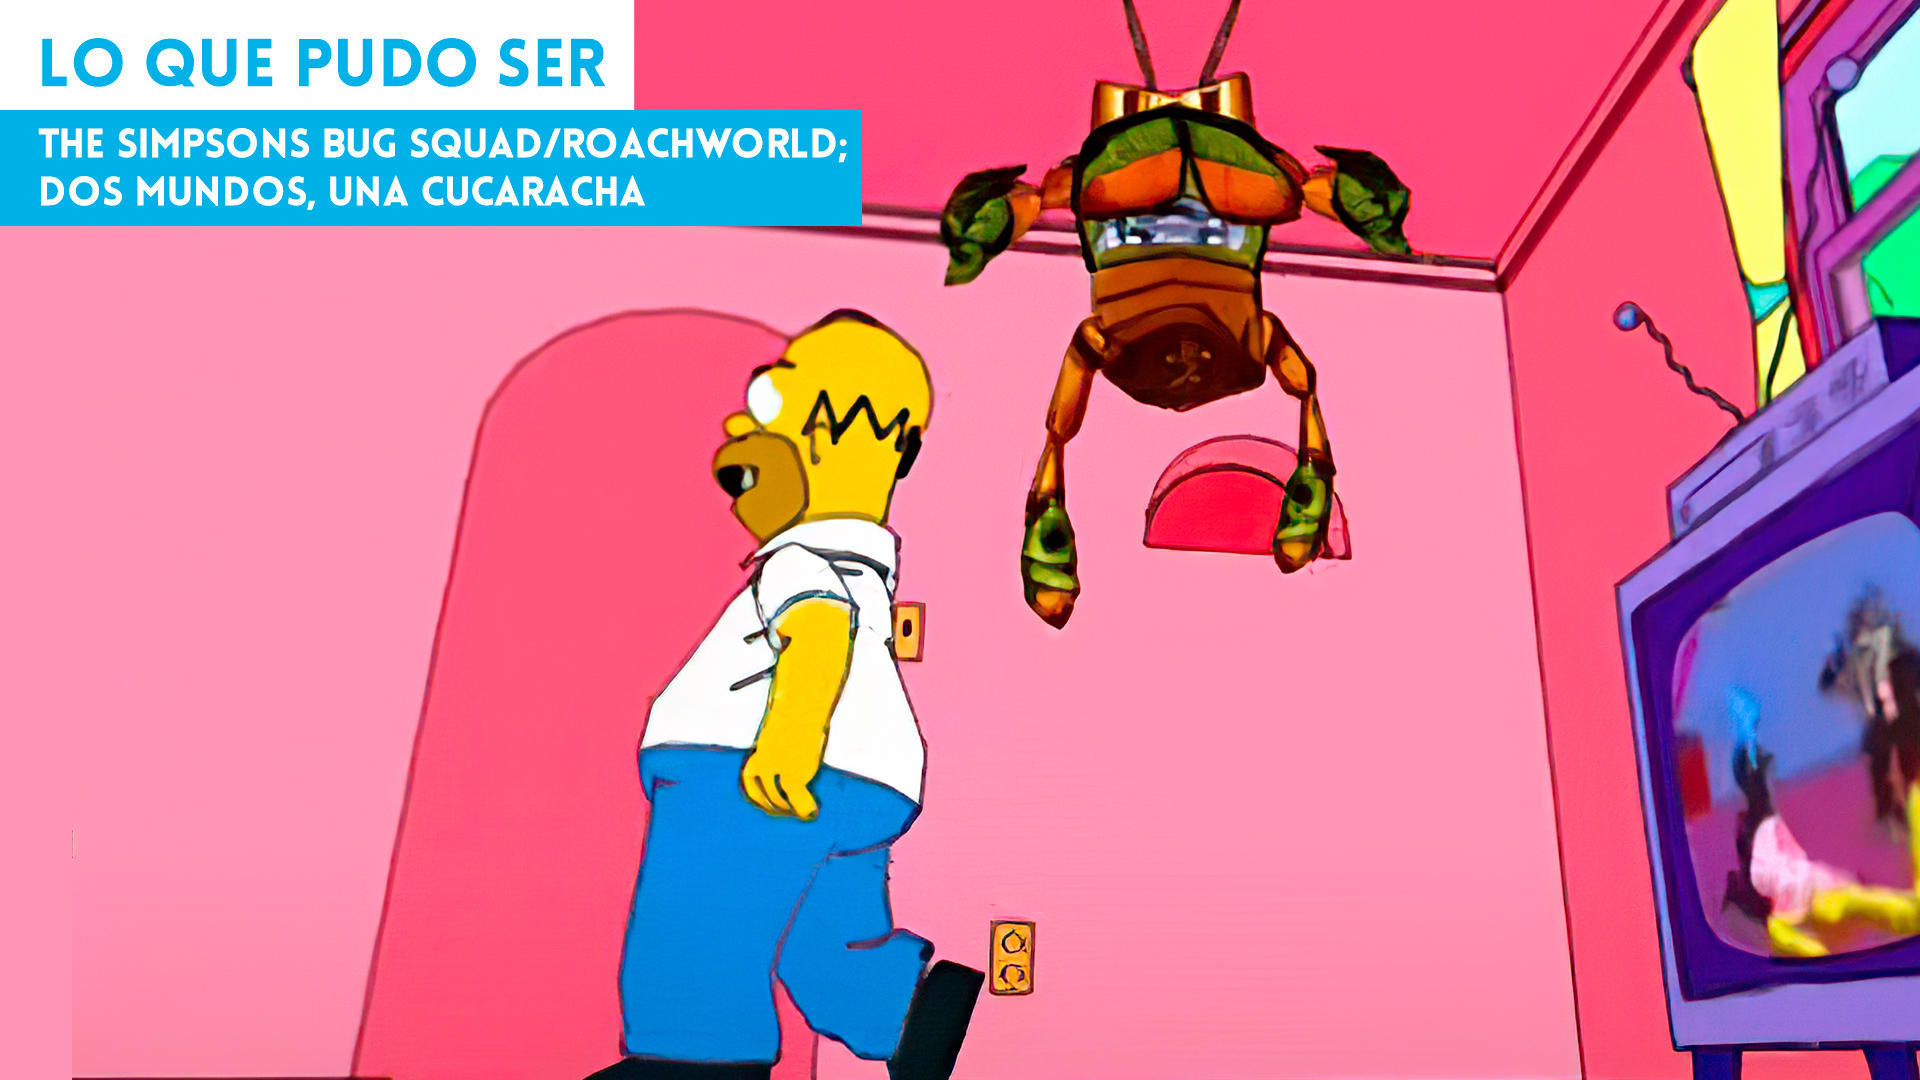 The Simpsons Bug Squad/Roachworld; dos mundos, una cucaracha